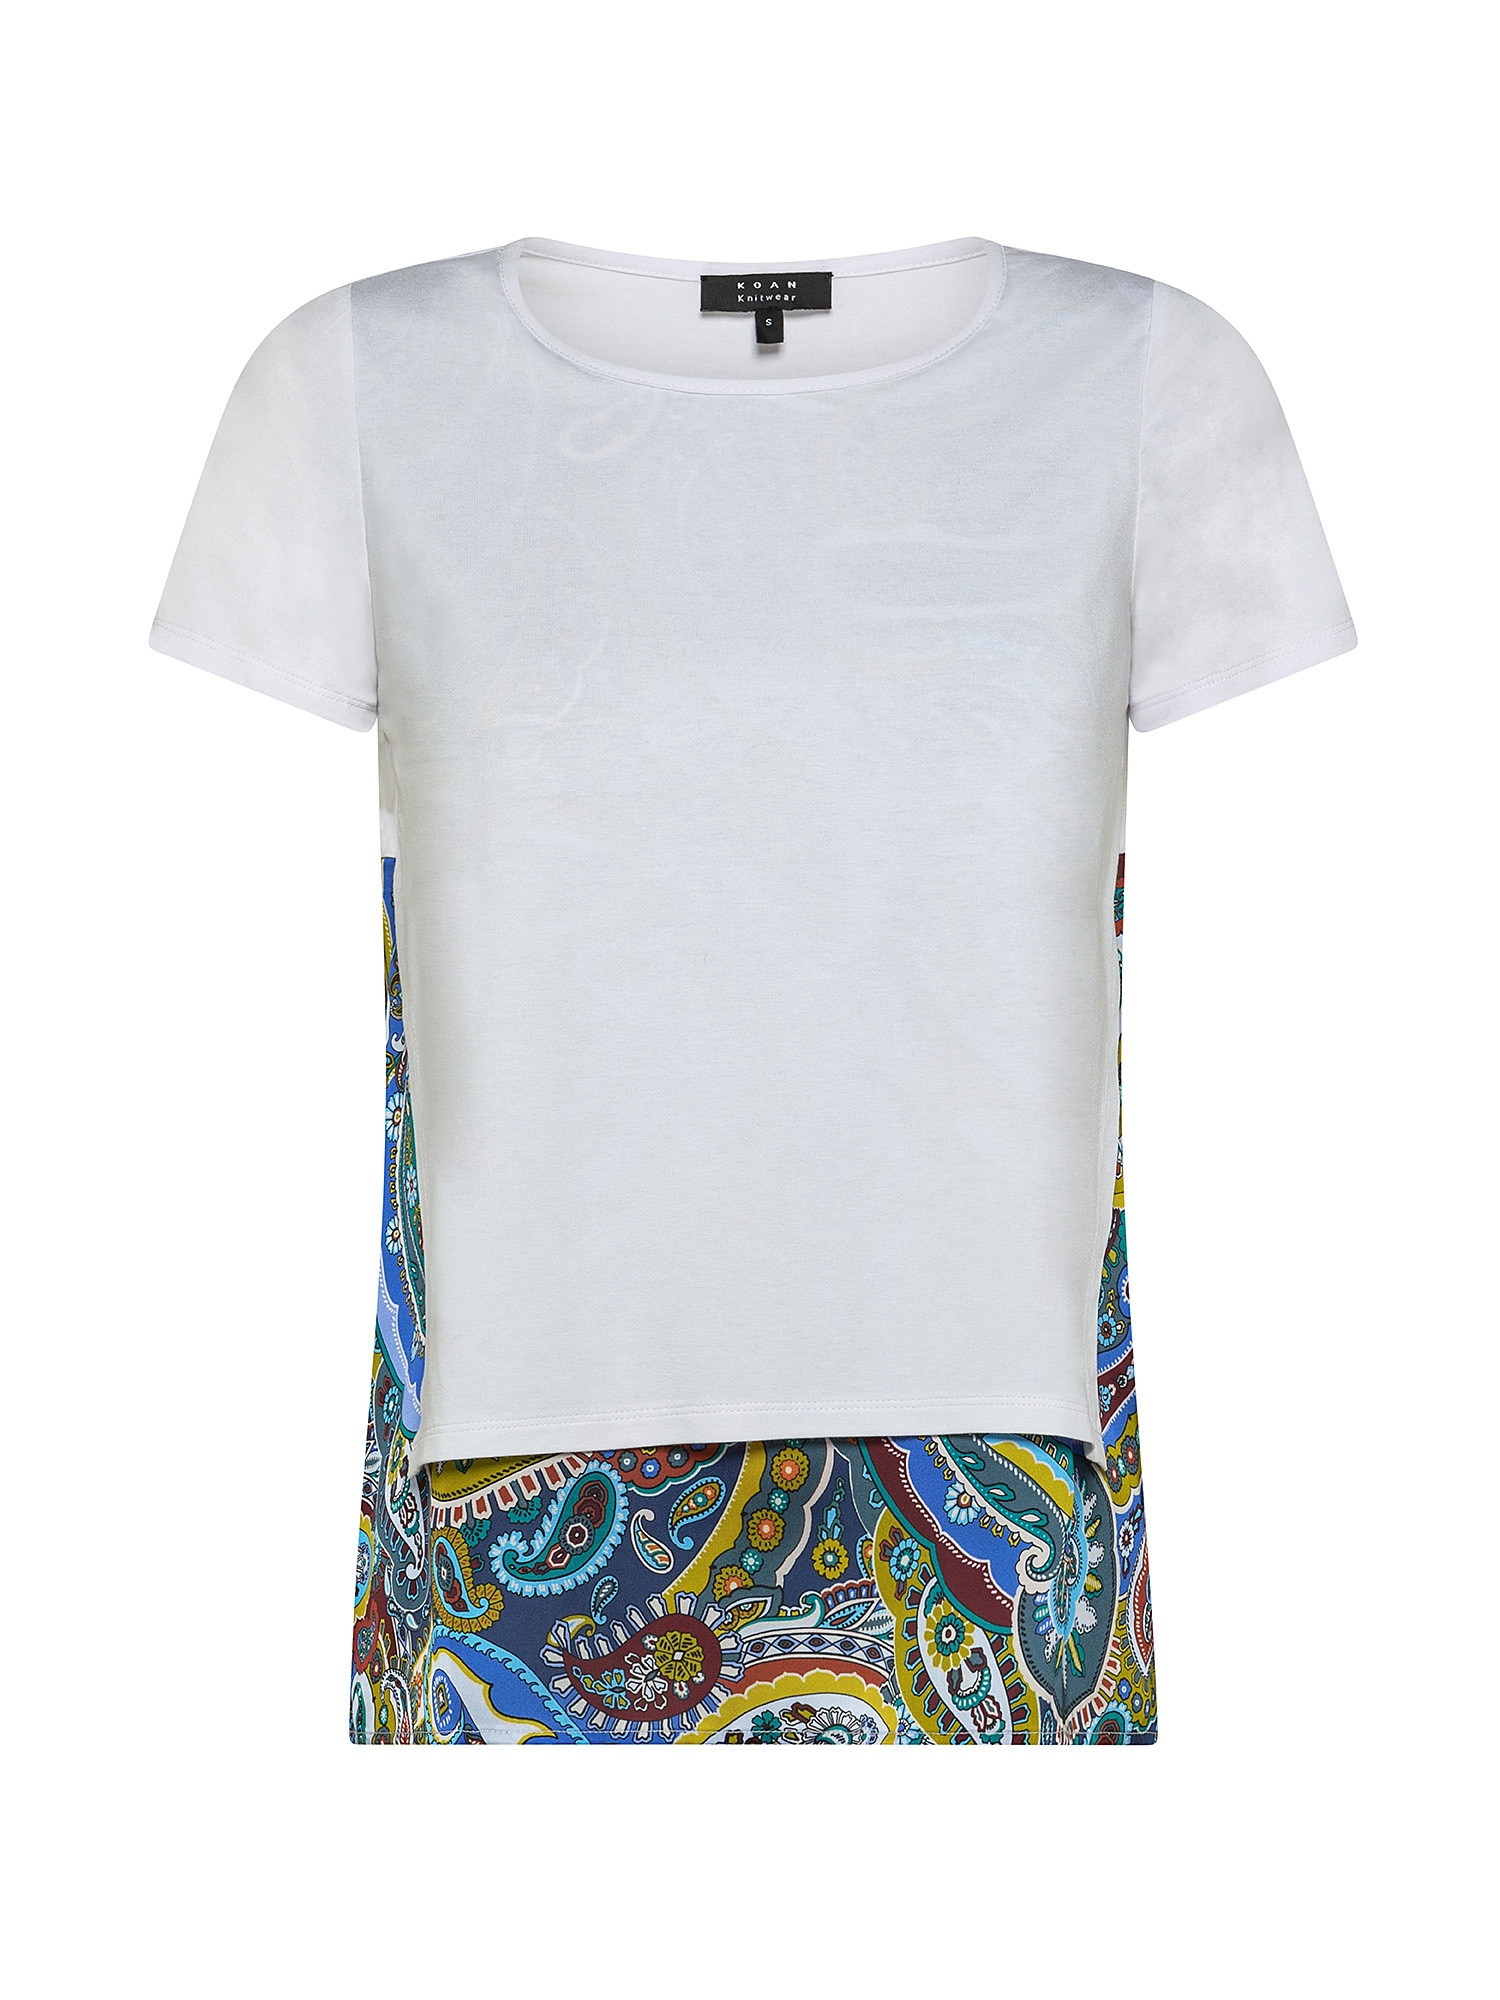 Patterned T-shirt, White, large image number 0